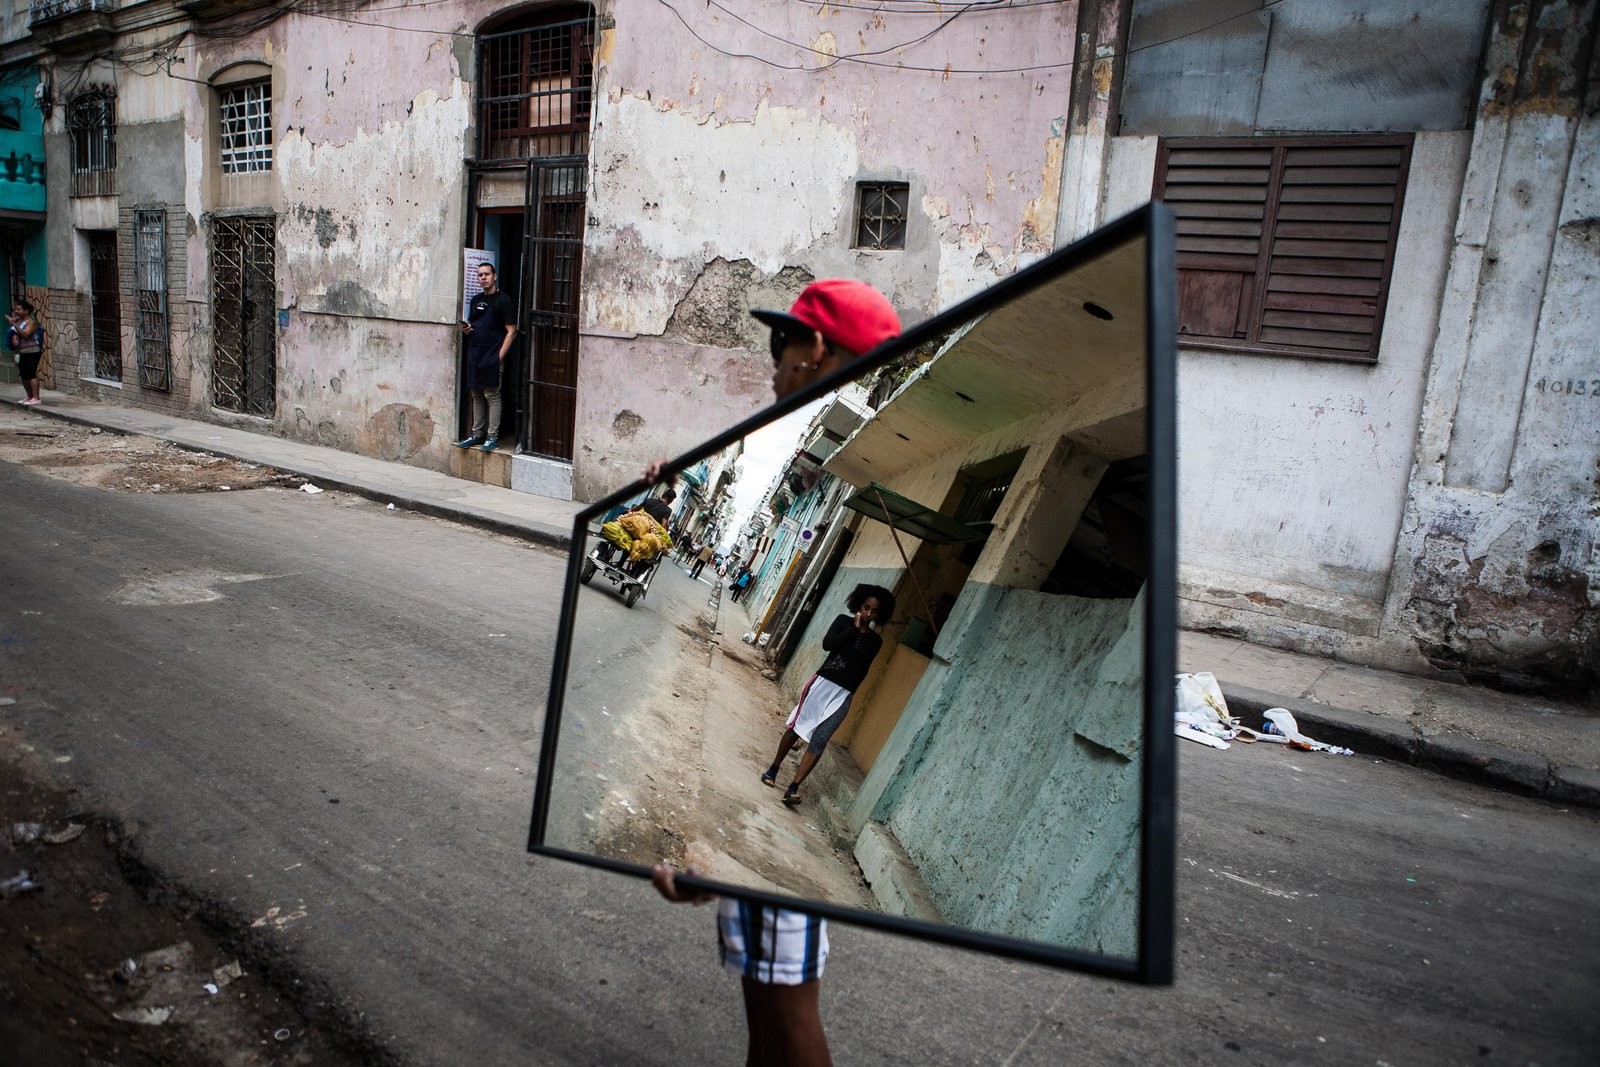 communism and everyday life in Cuba (Foto: David Tesinsky)